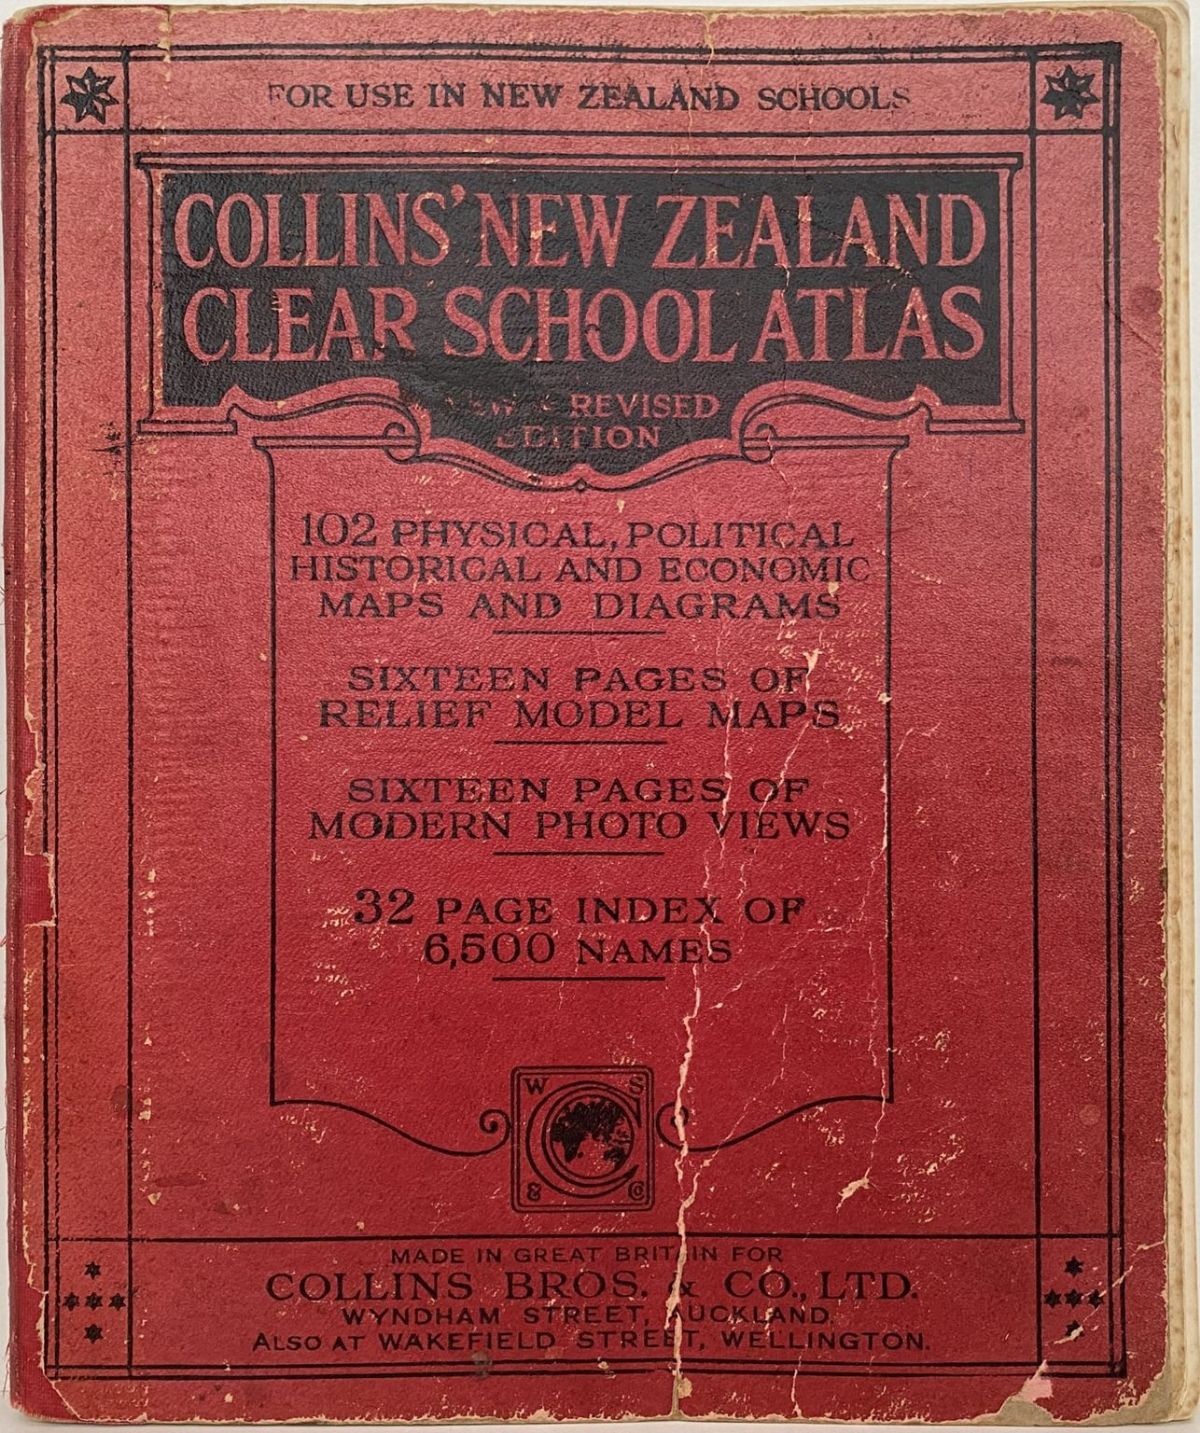 Collins' New Zealand Clear School Atlas